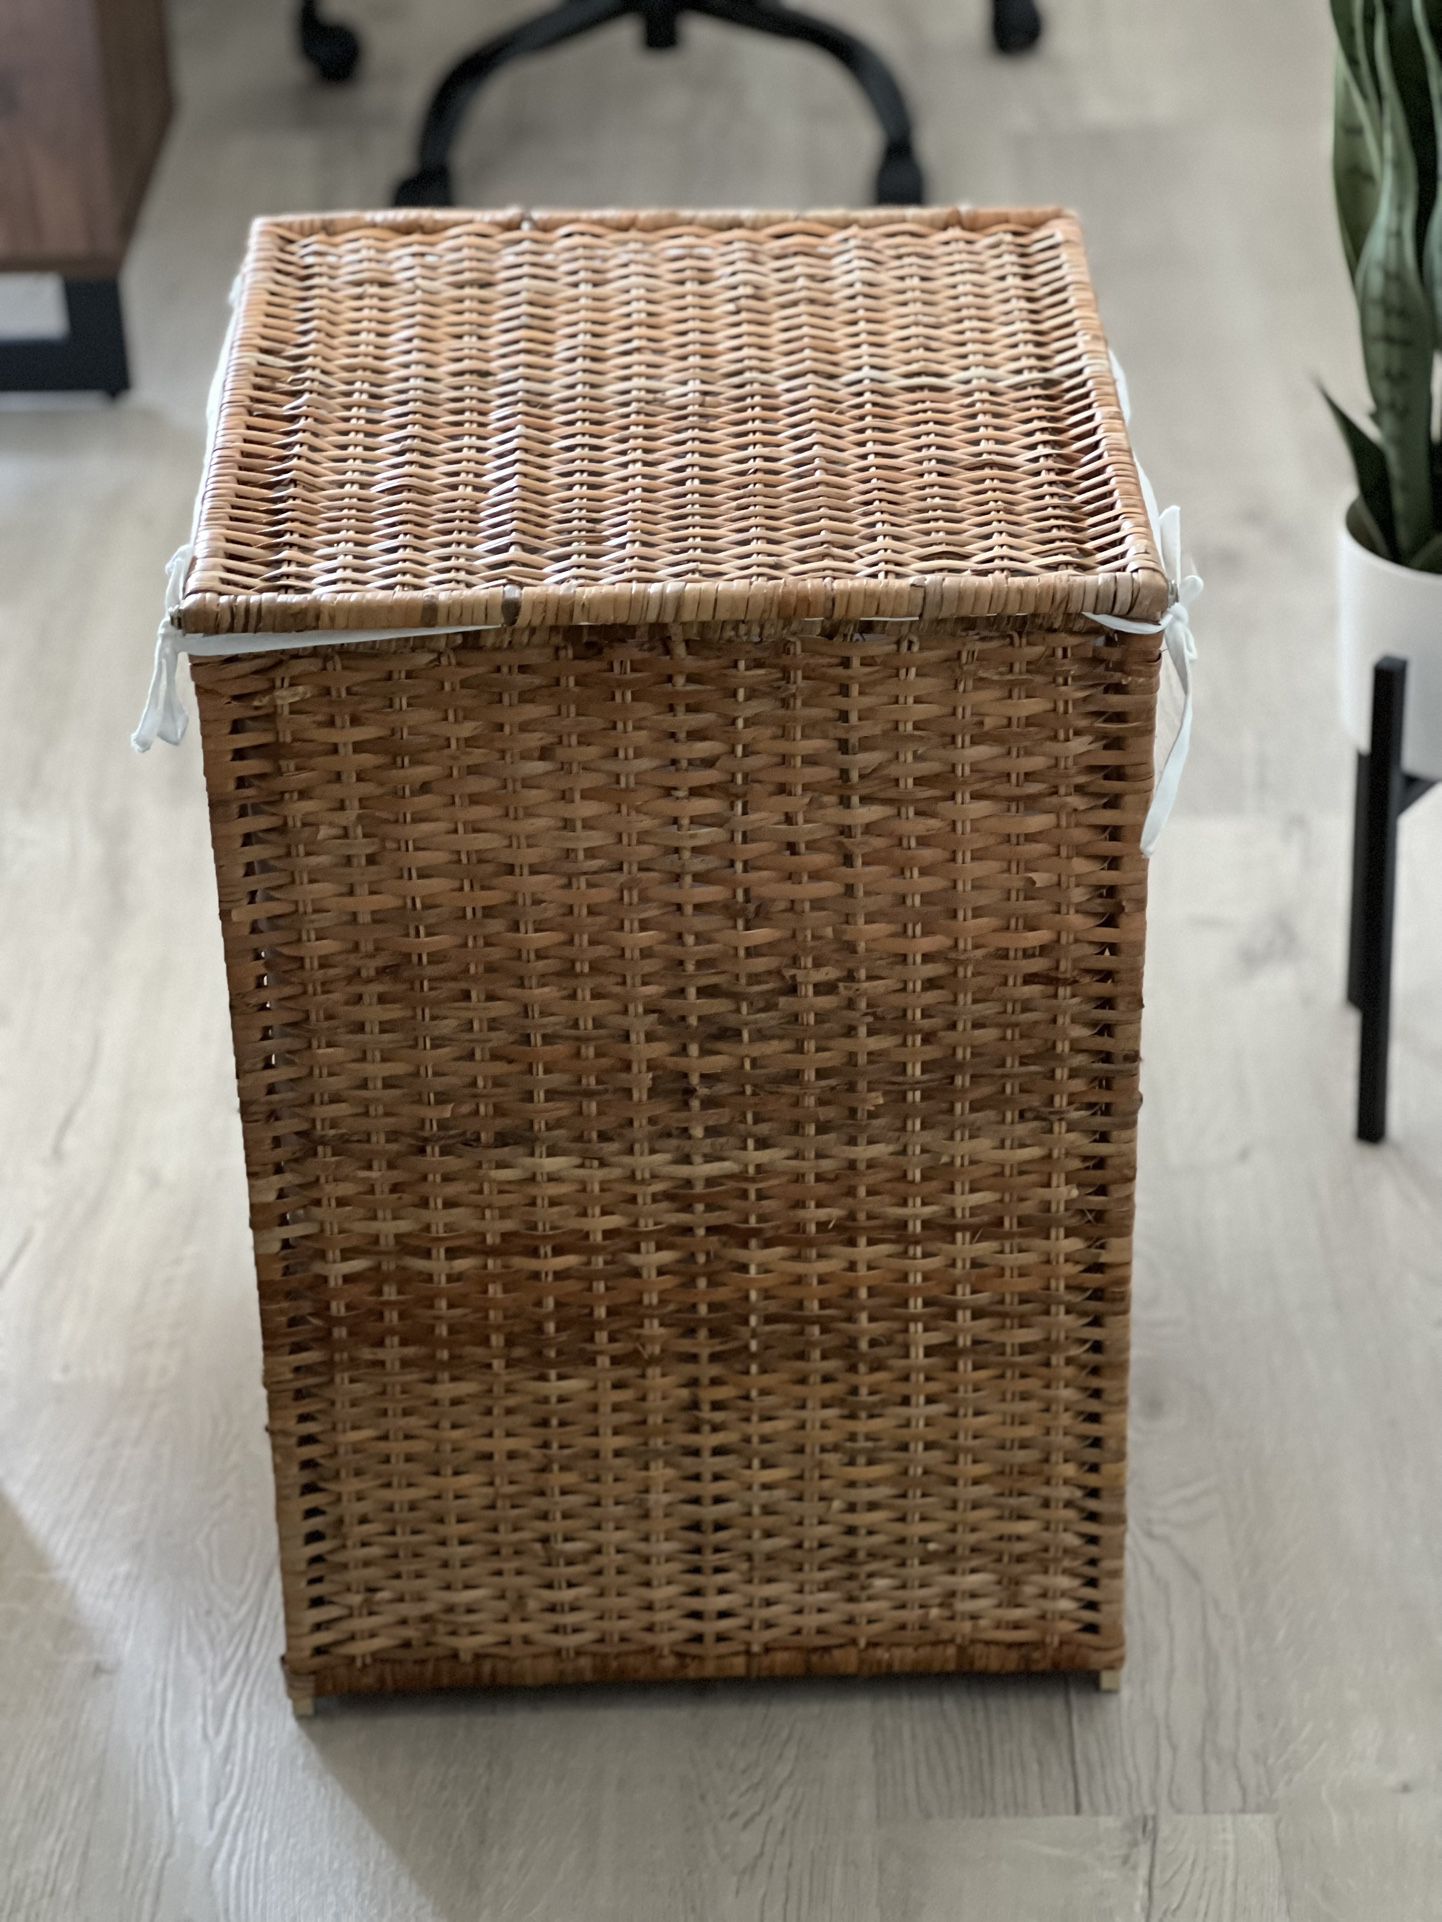 BRANÄS rattan, Laundry basket with lining - IKEA